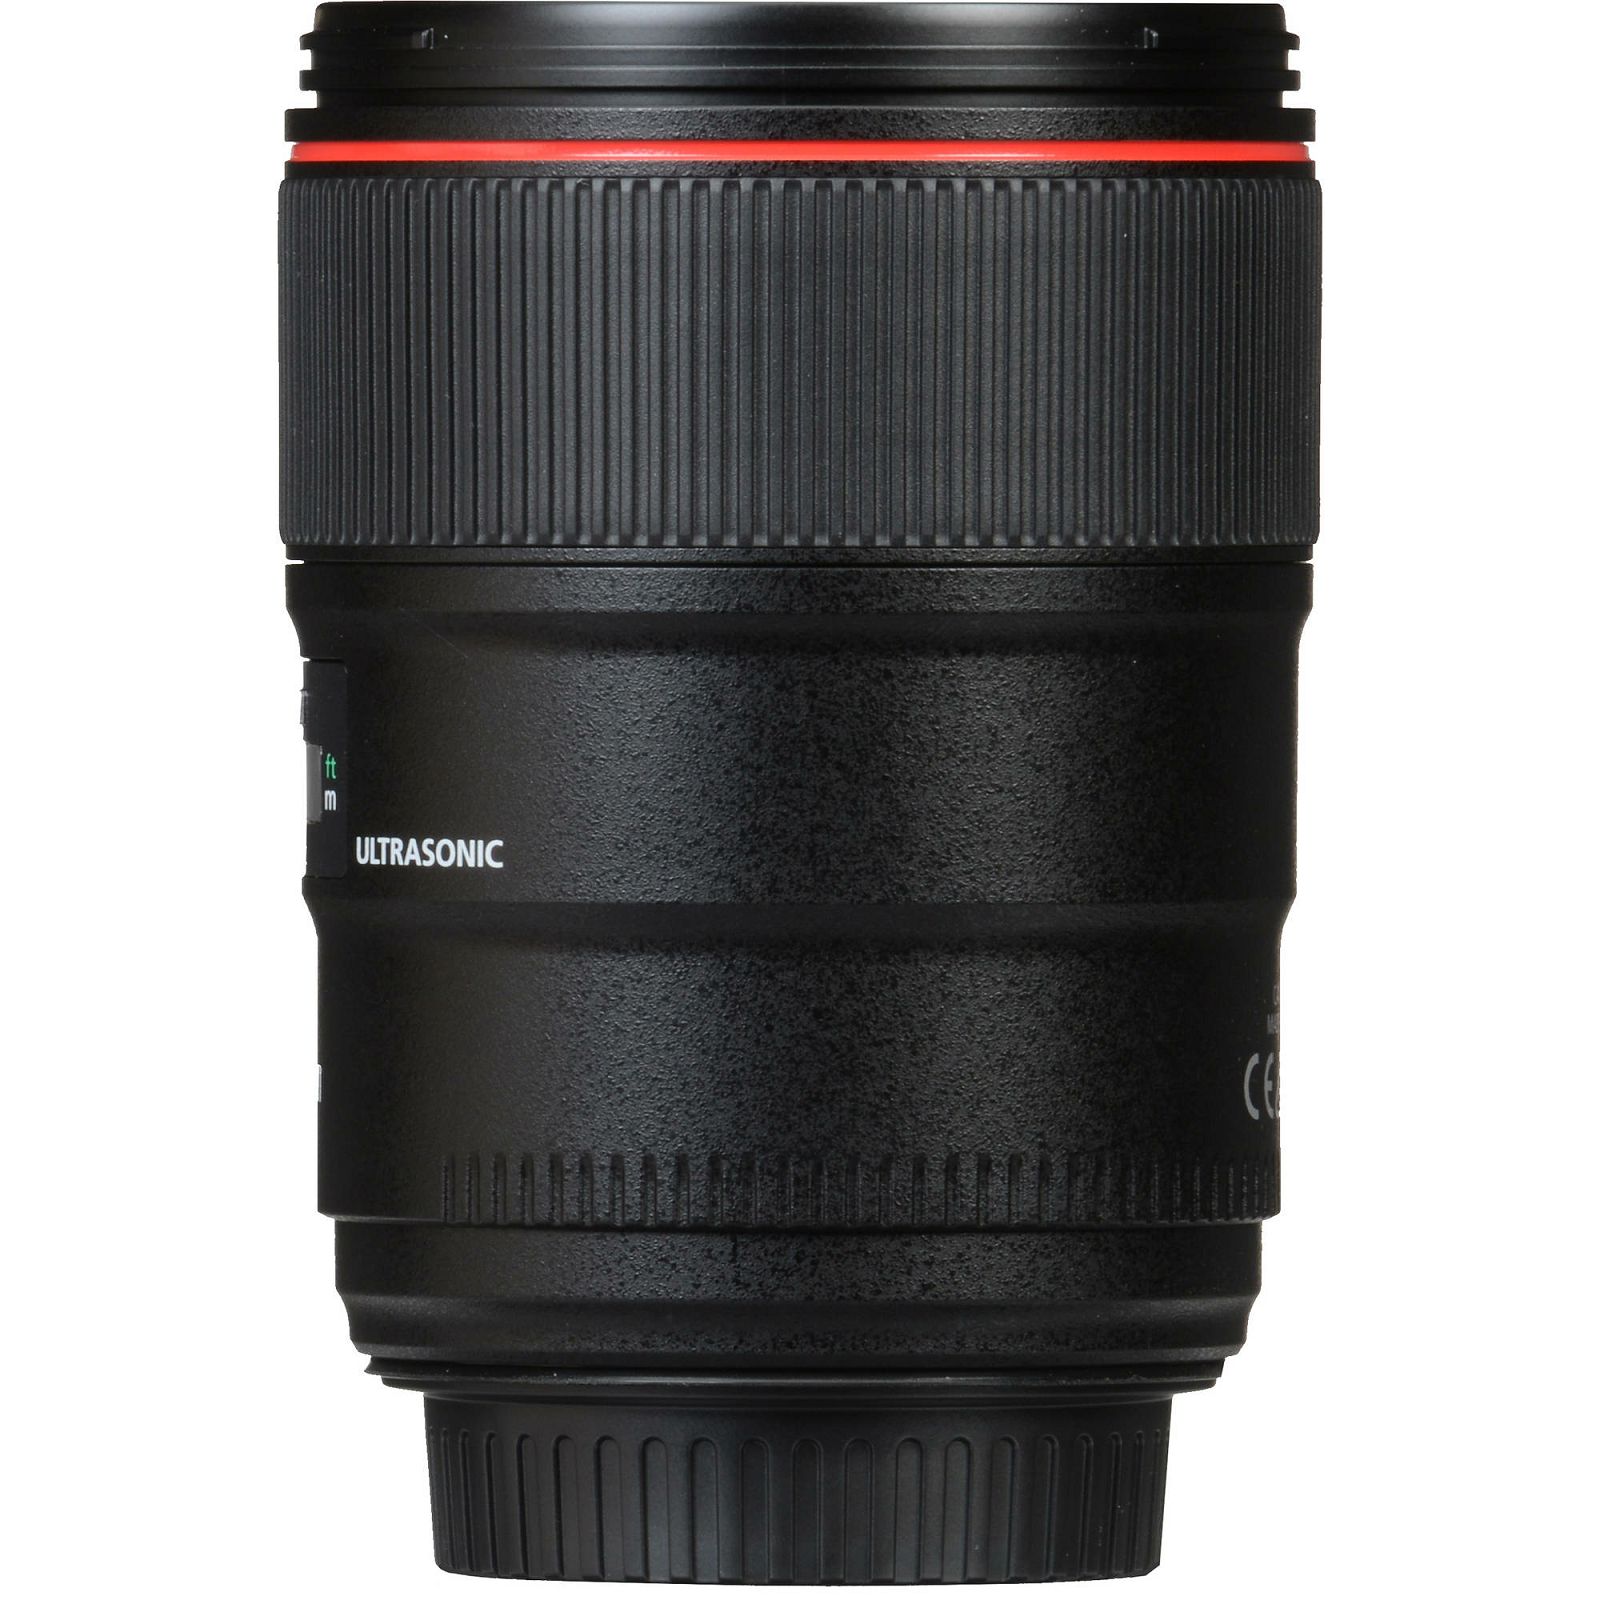 Canon EF 35mm f/1.4 L II USM prime lens fiksni širokokutni objektiv 35 f/1.4L F1.4 1.4 L (9523B005AA)